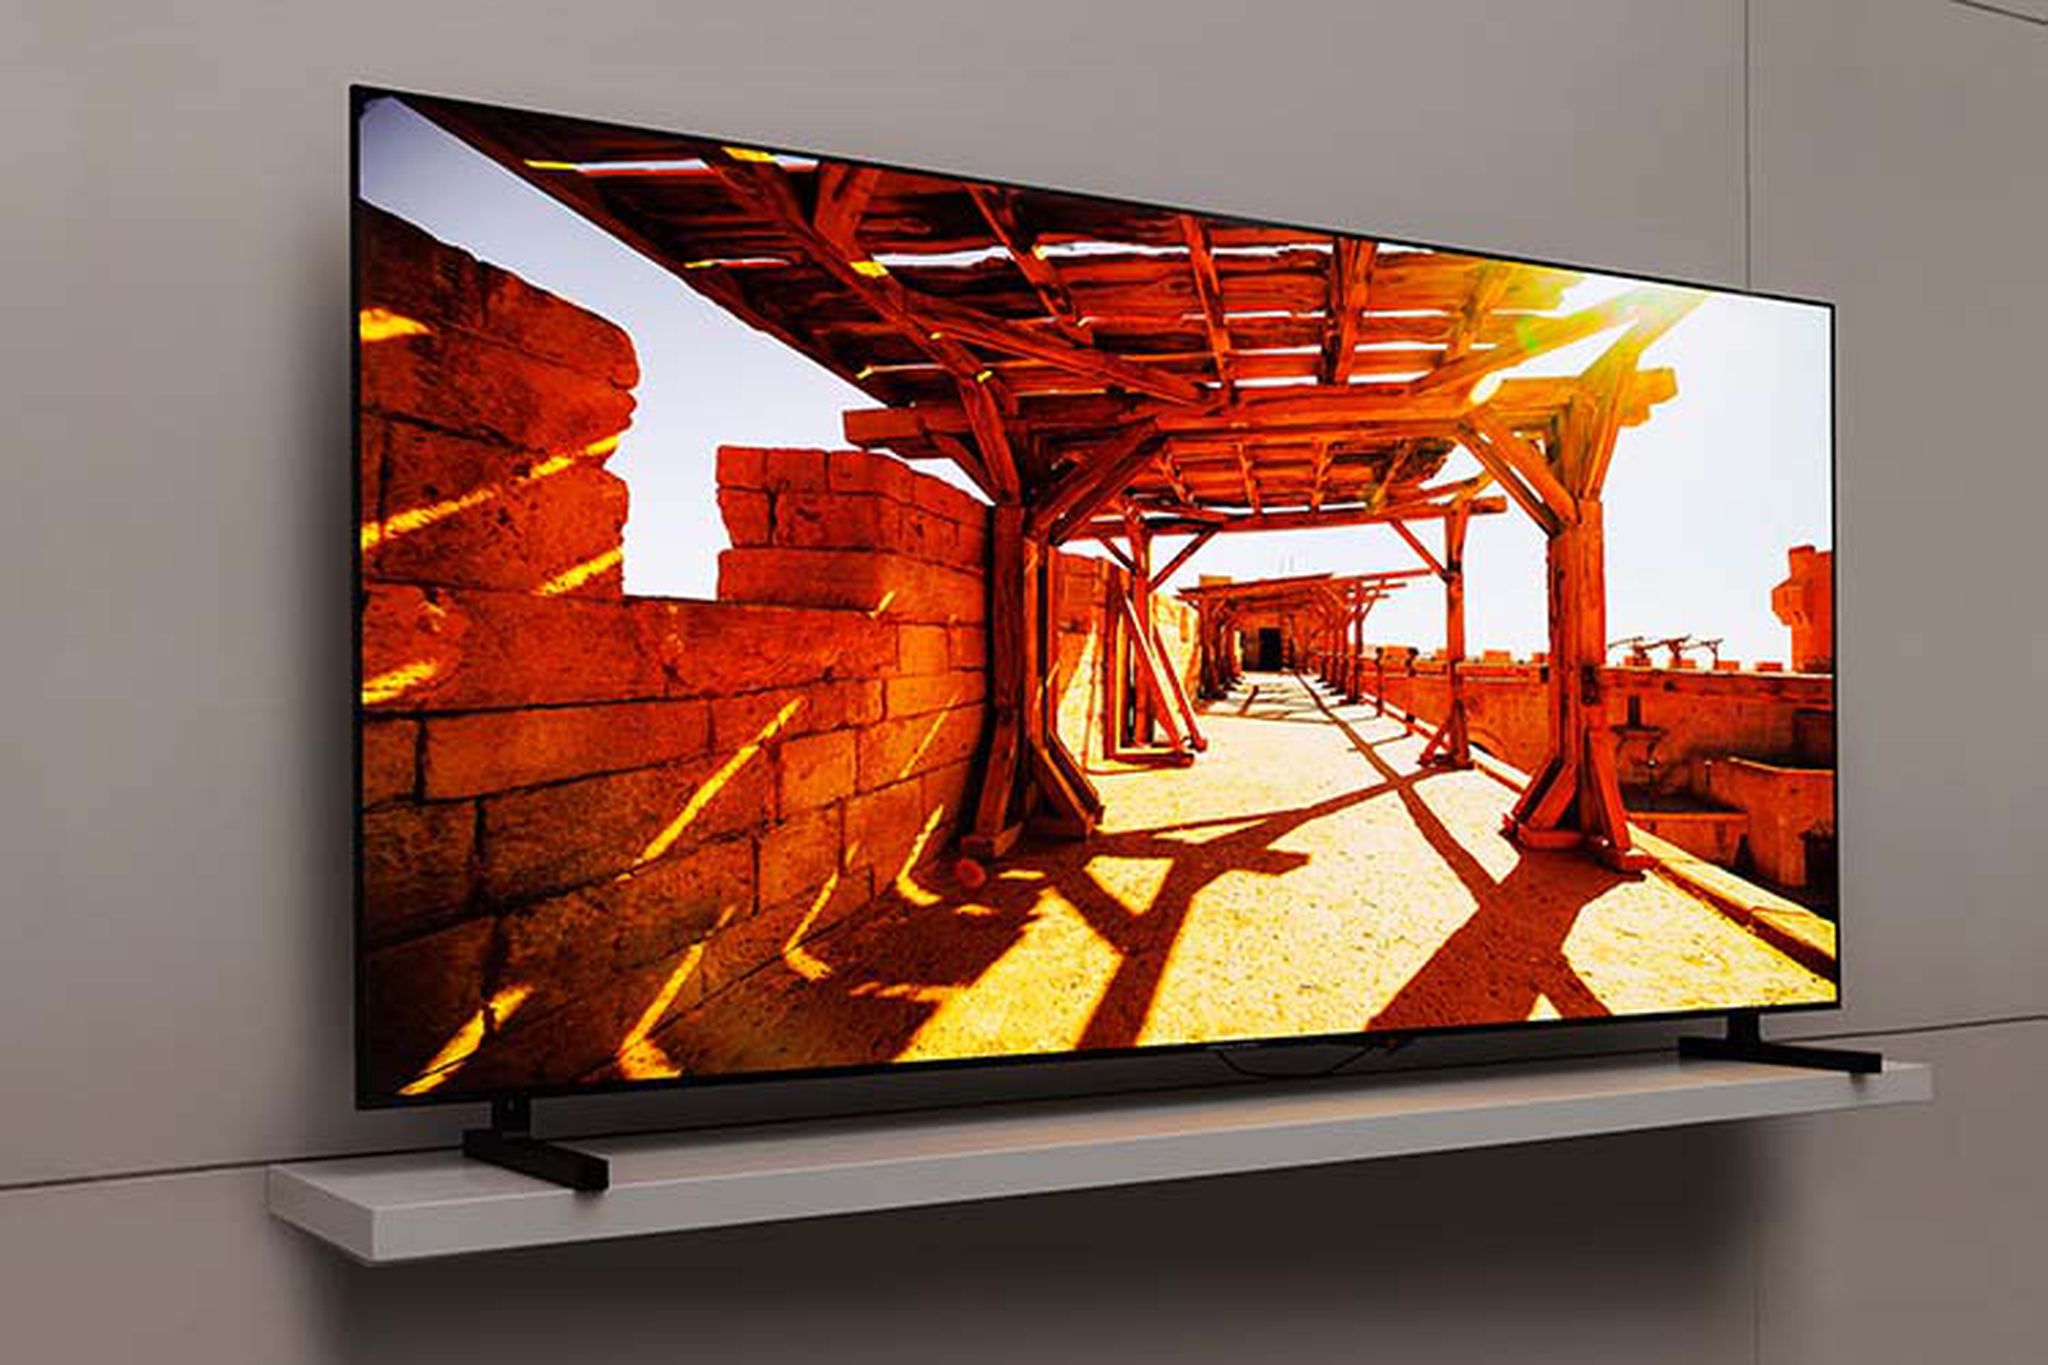 Samsung Display’s new QDOLED TV panels can hit 2,000 nits of peak